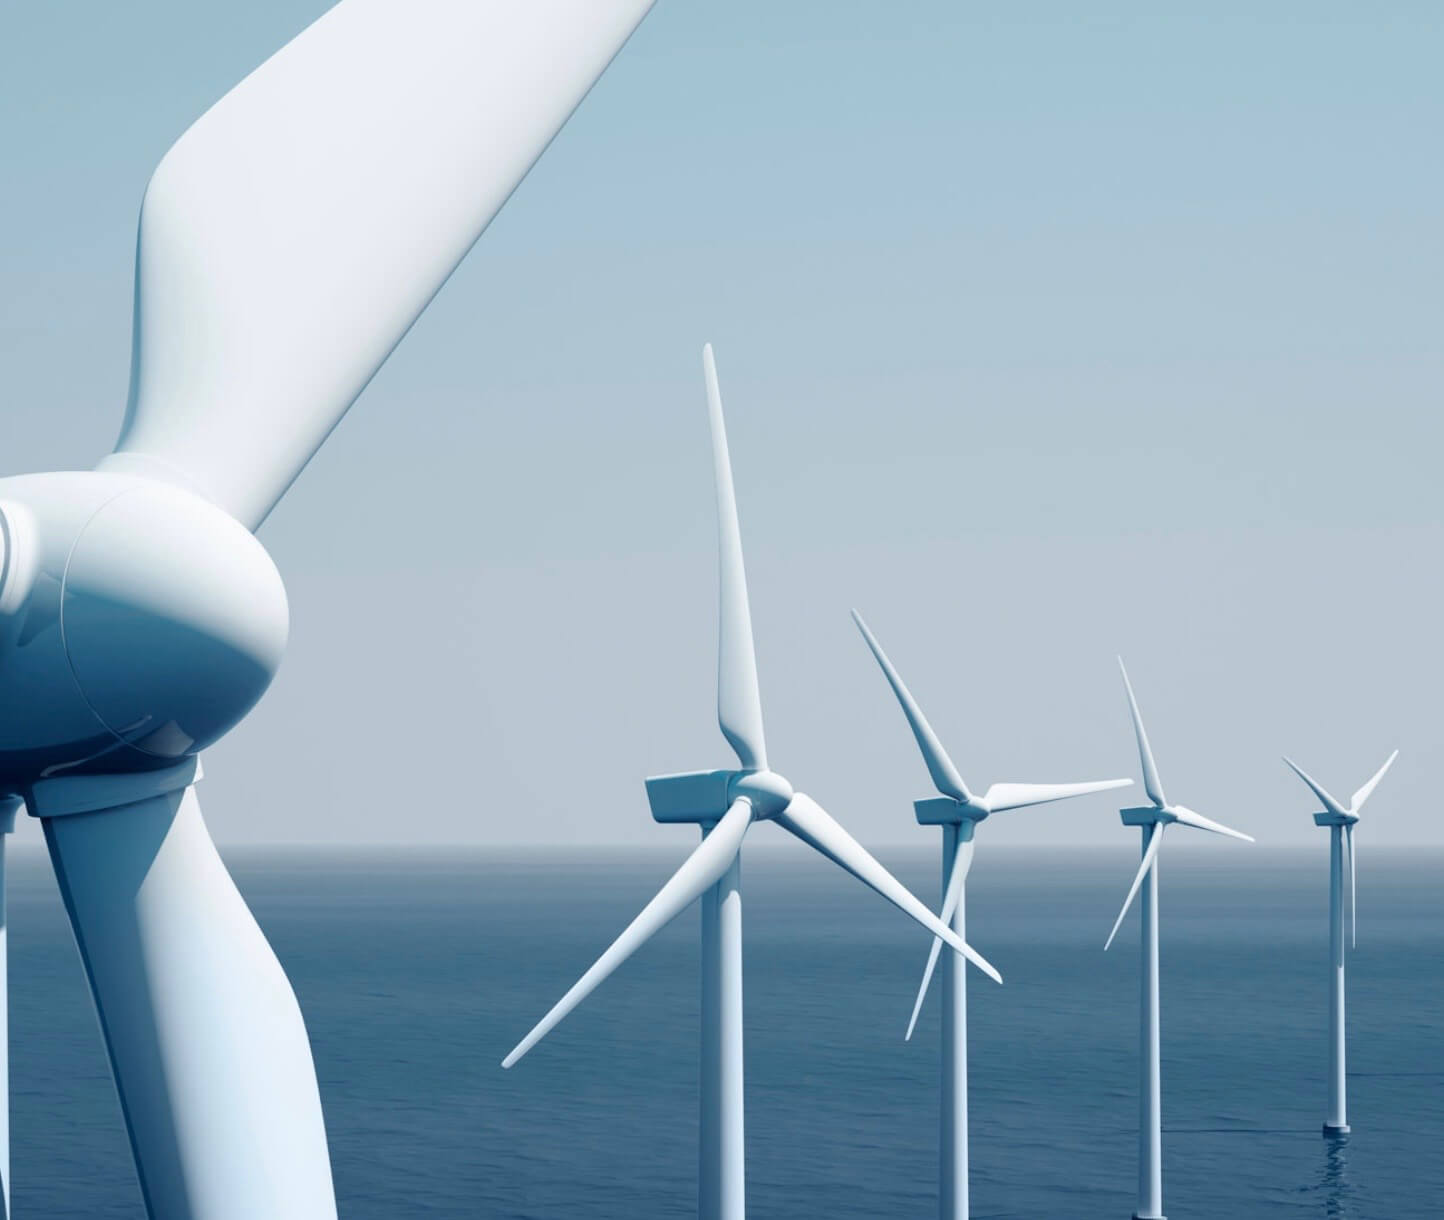 Wind power. The ultimate renewable energy source?